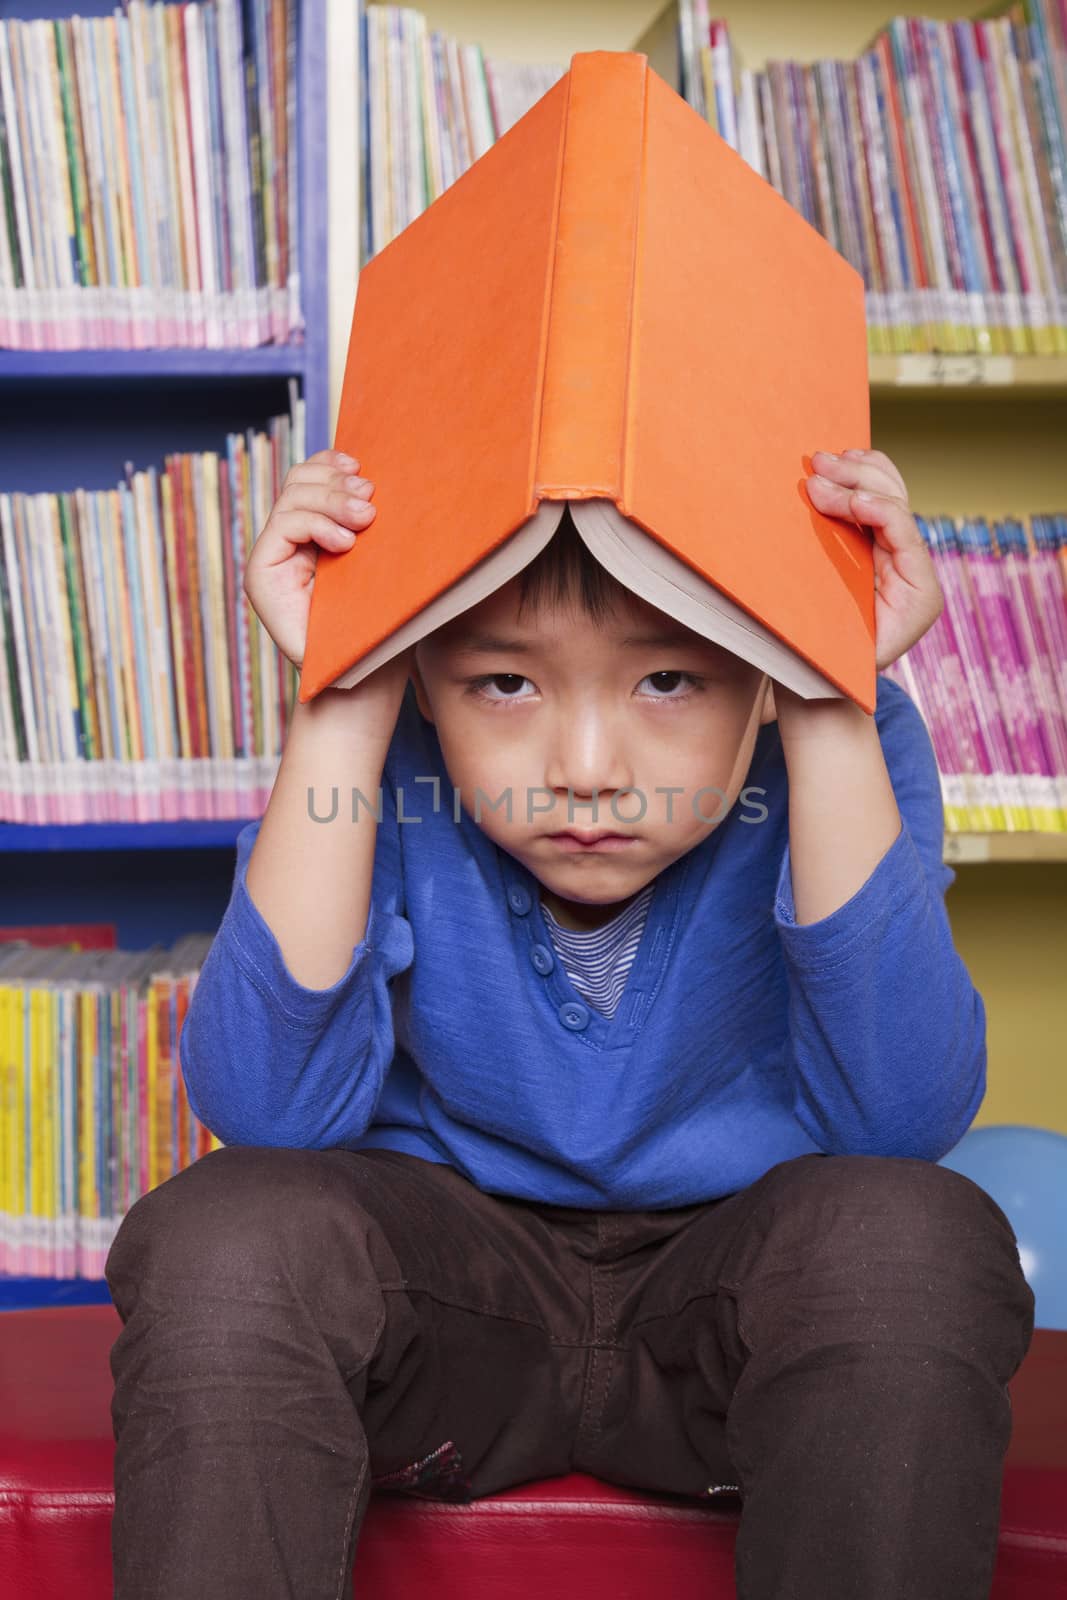 Unhappy Boy with Book by XiXinXing